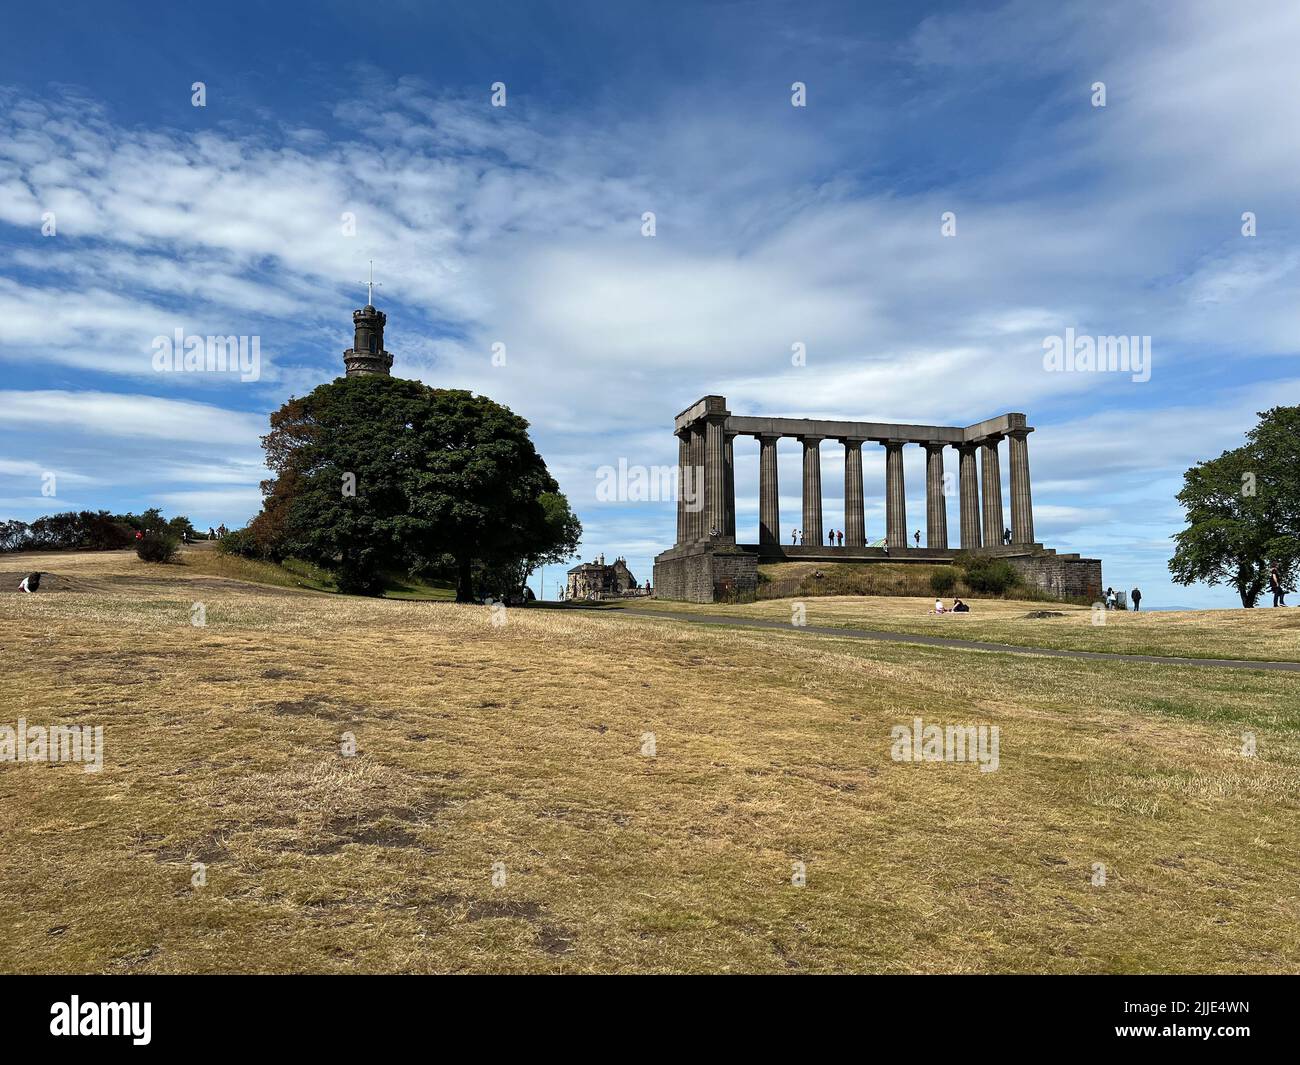 A beautiful shot of The National Monument of Scotland on Calton Hill in Edinburgh, Scotland Stock Photo